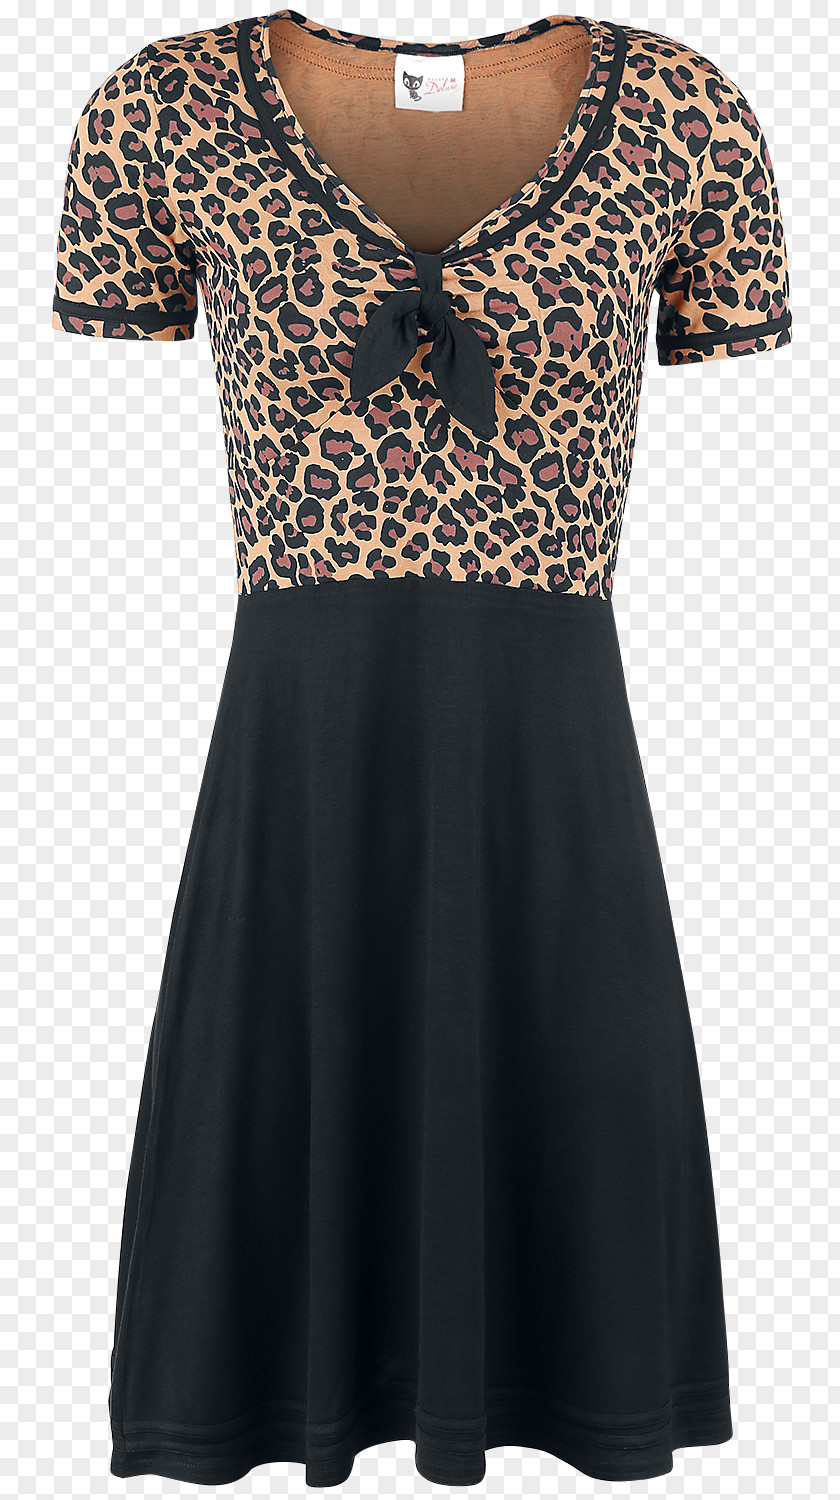 Medium Length Dress Clothing Animal Print Sleeve Online Shopping PNG